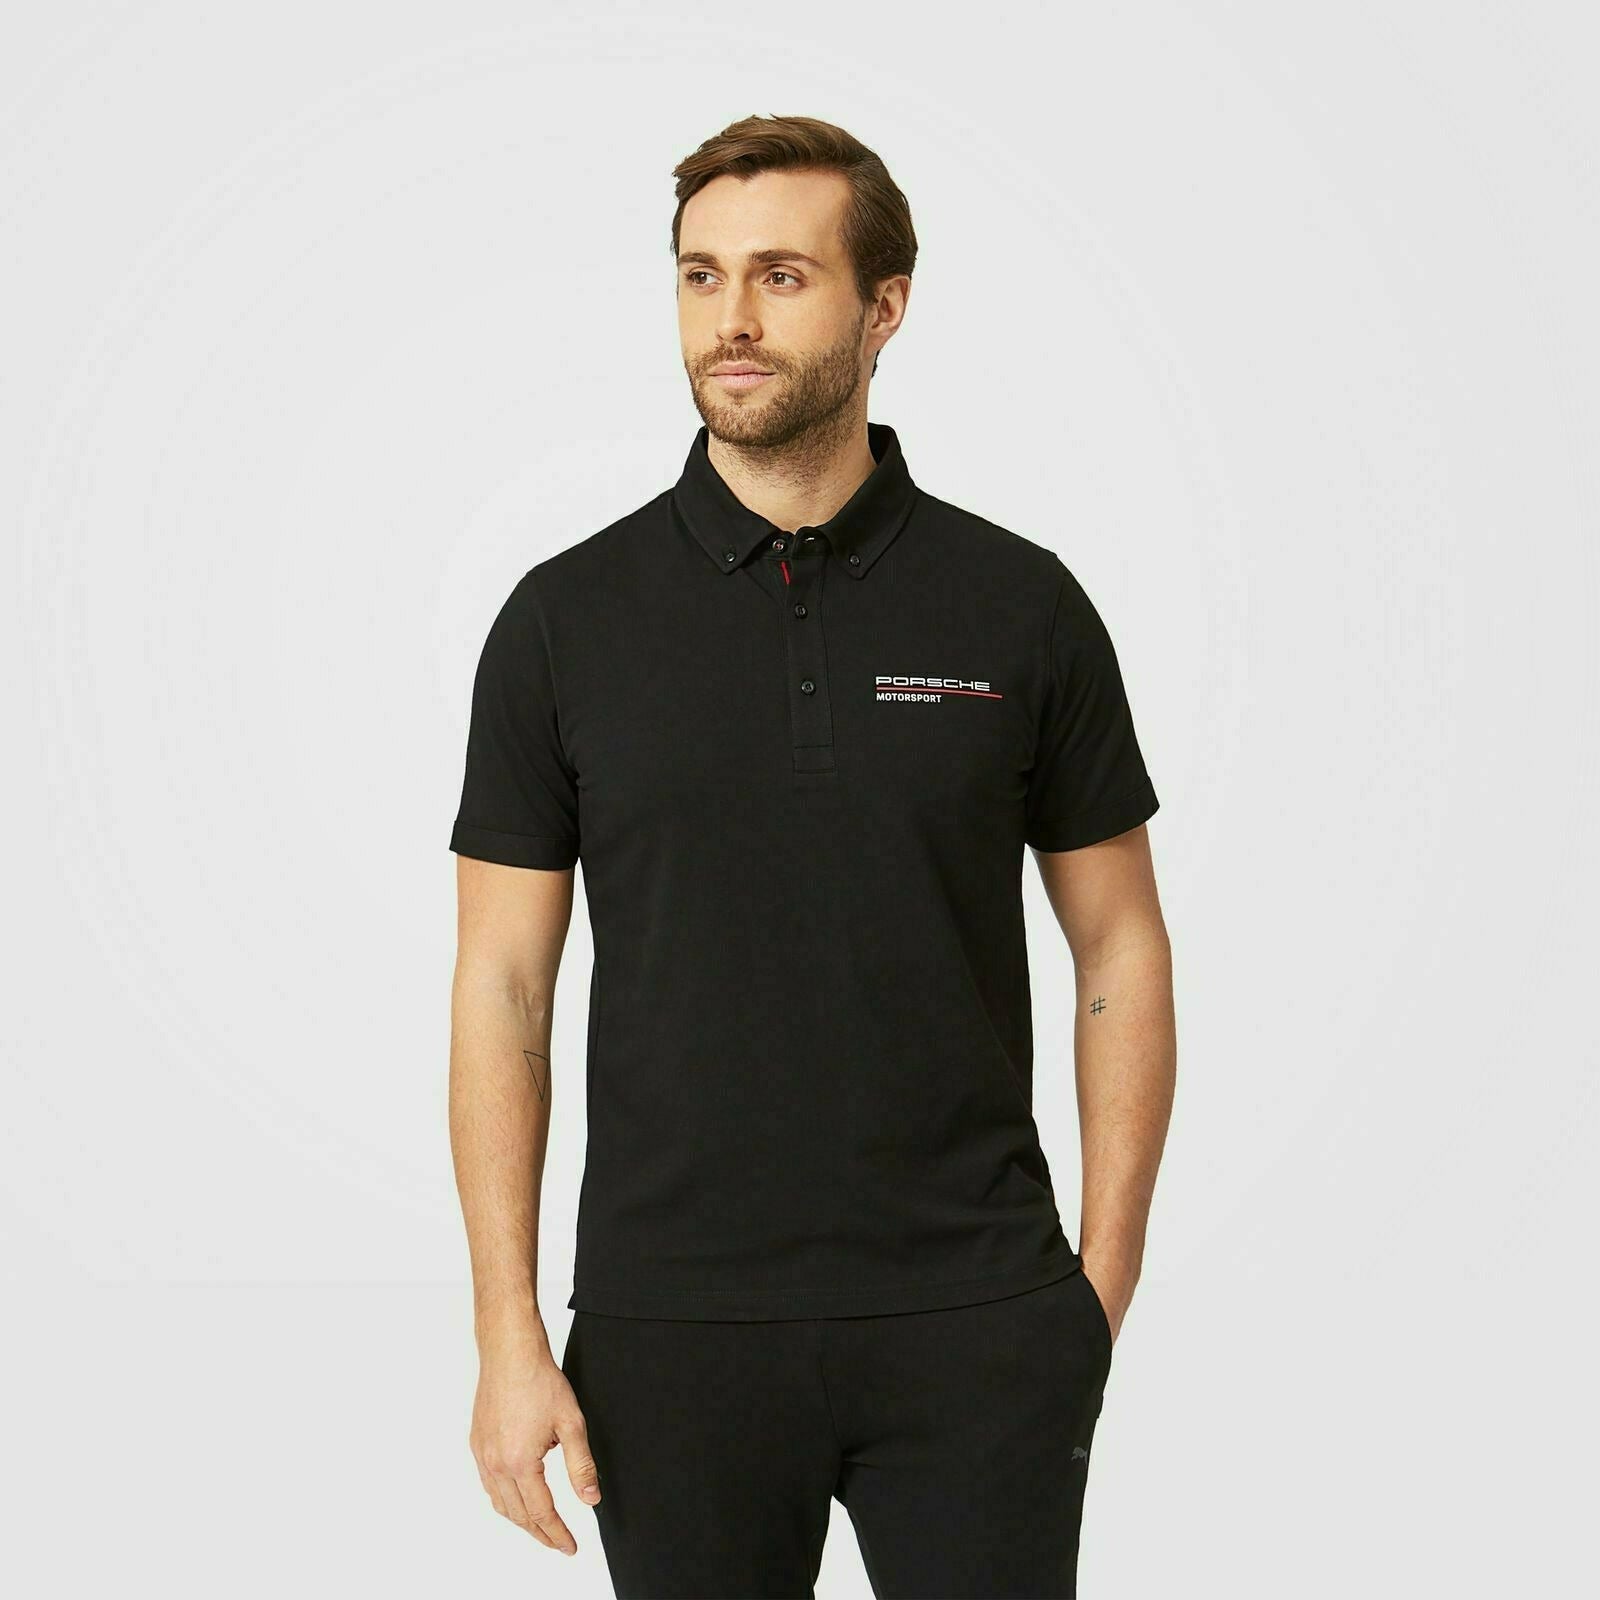 Porsche Motorsport Black Polo Shirt